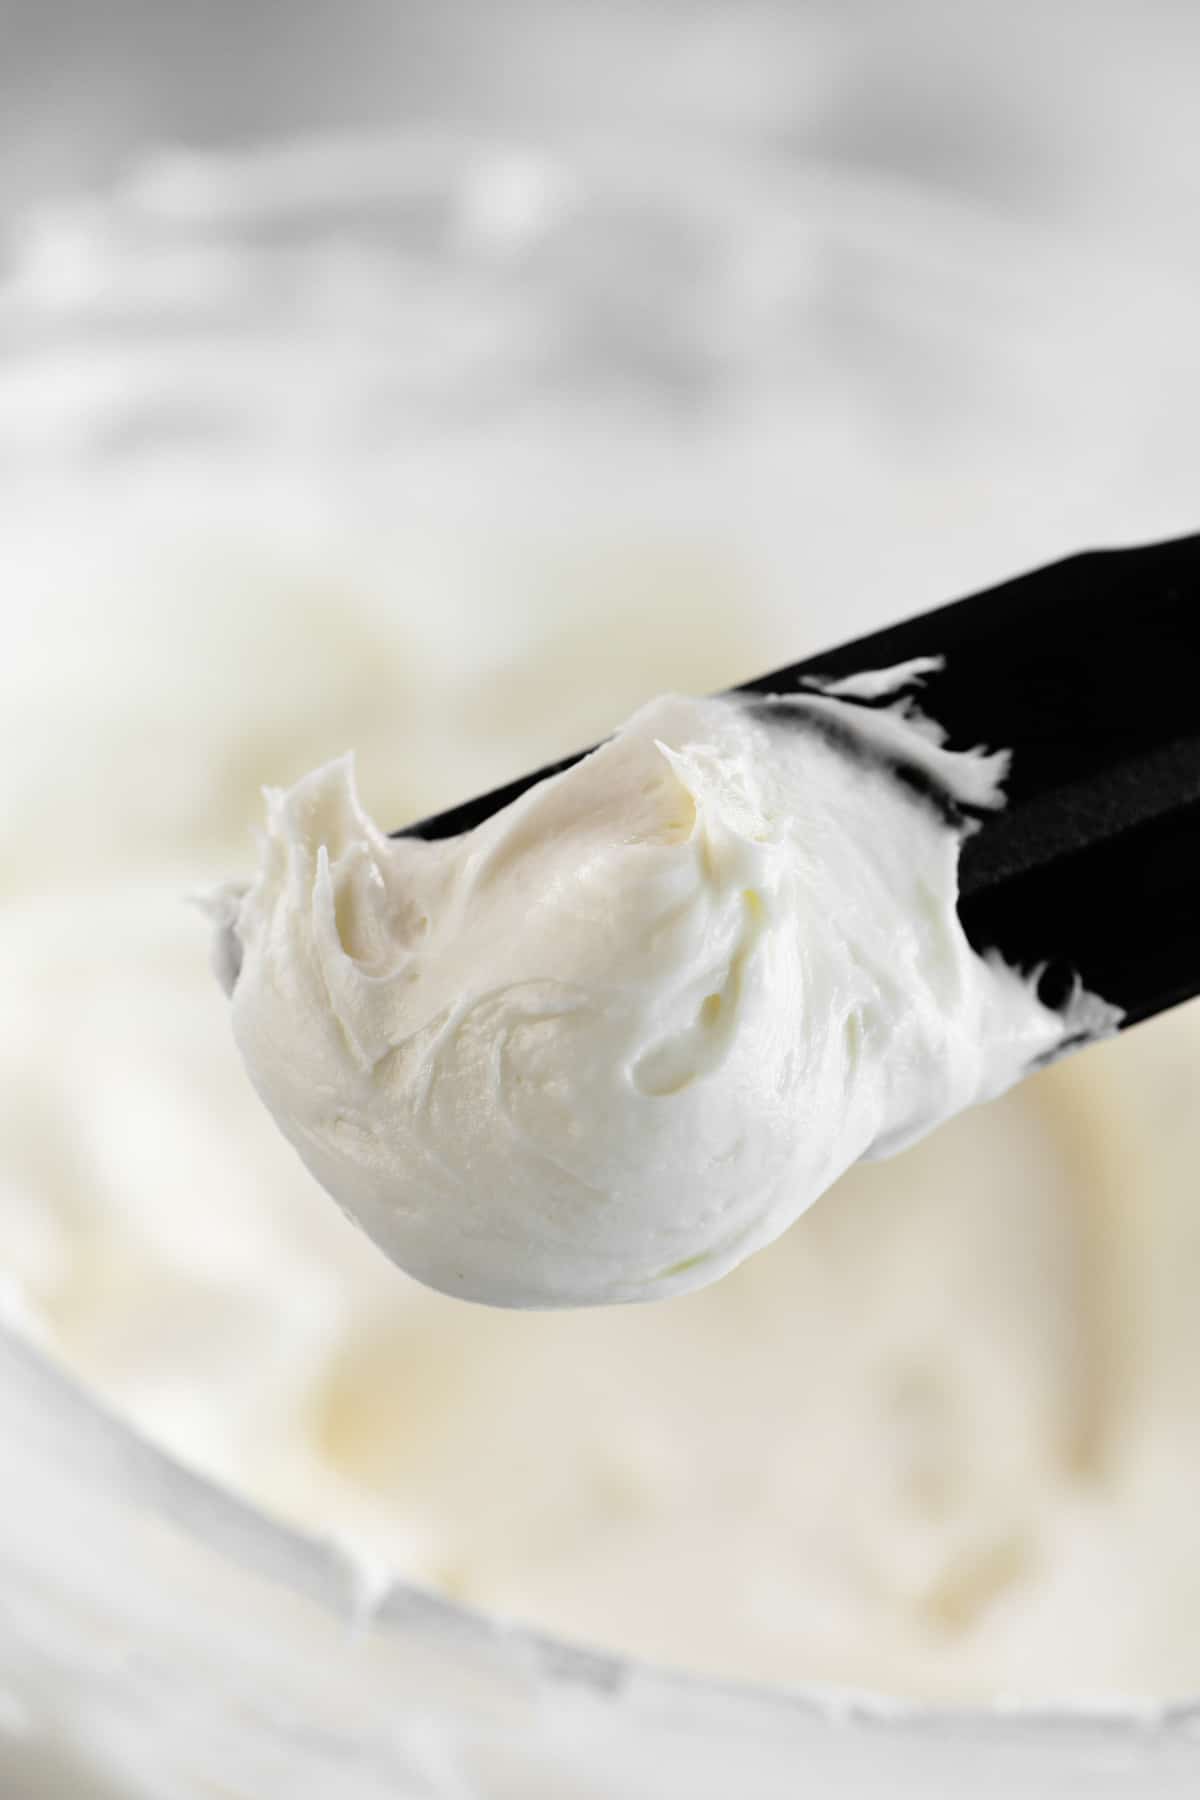 cream cheese buttercream on a spatula